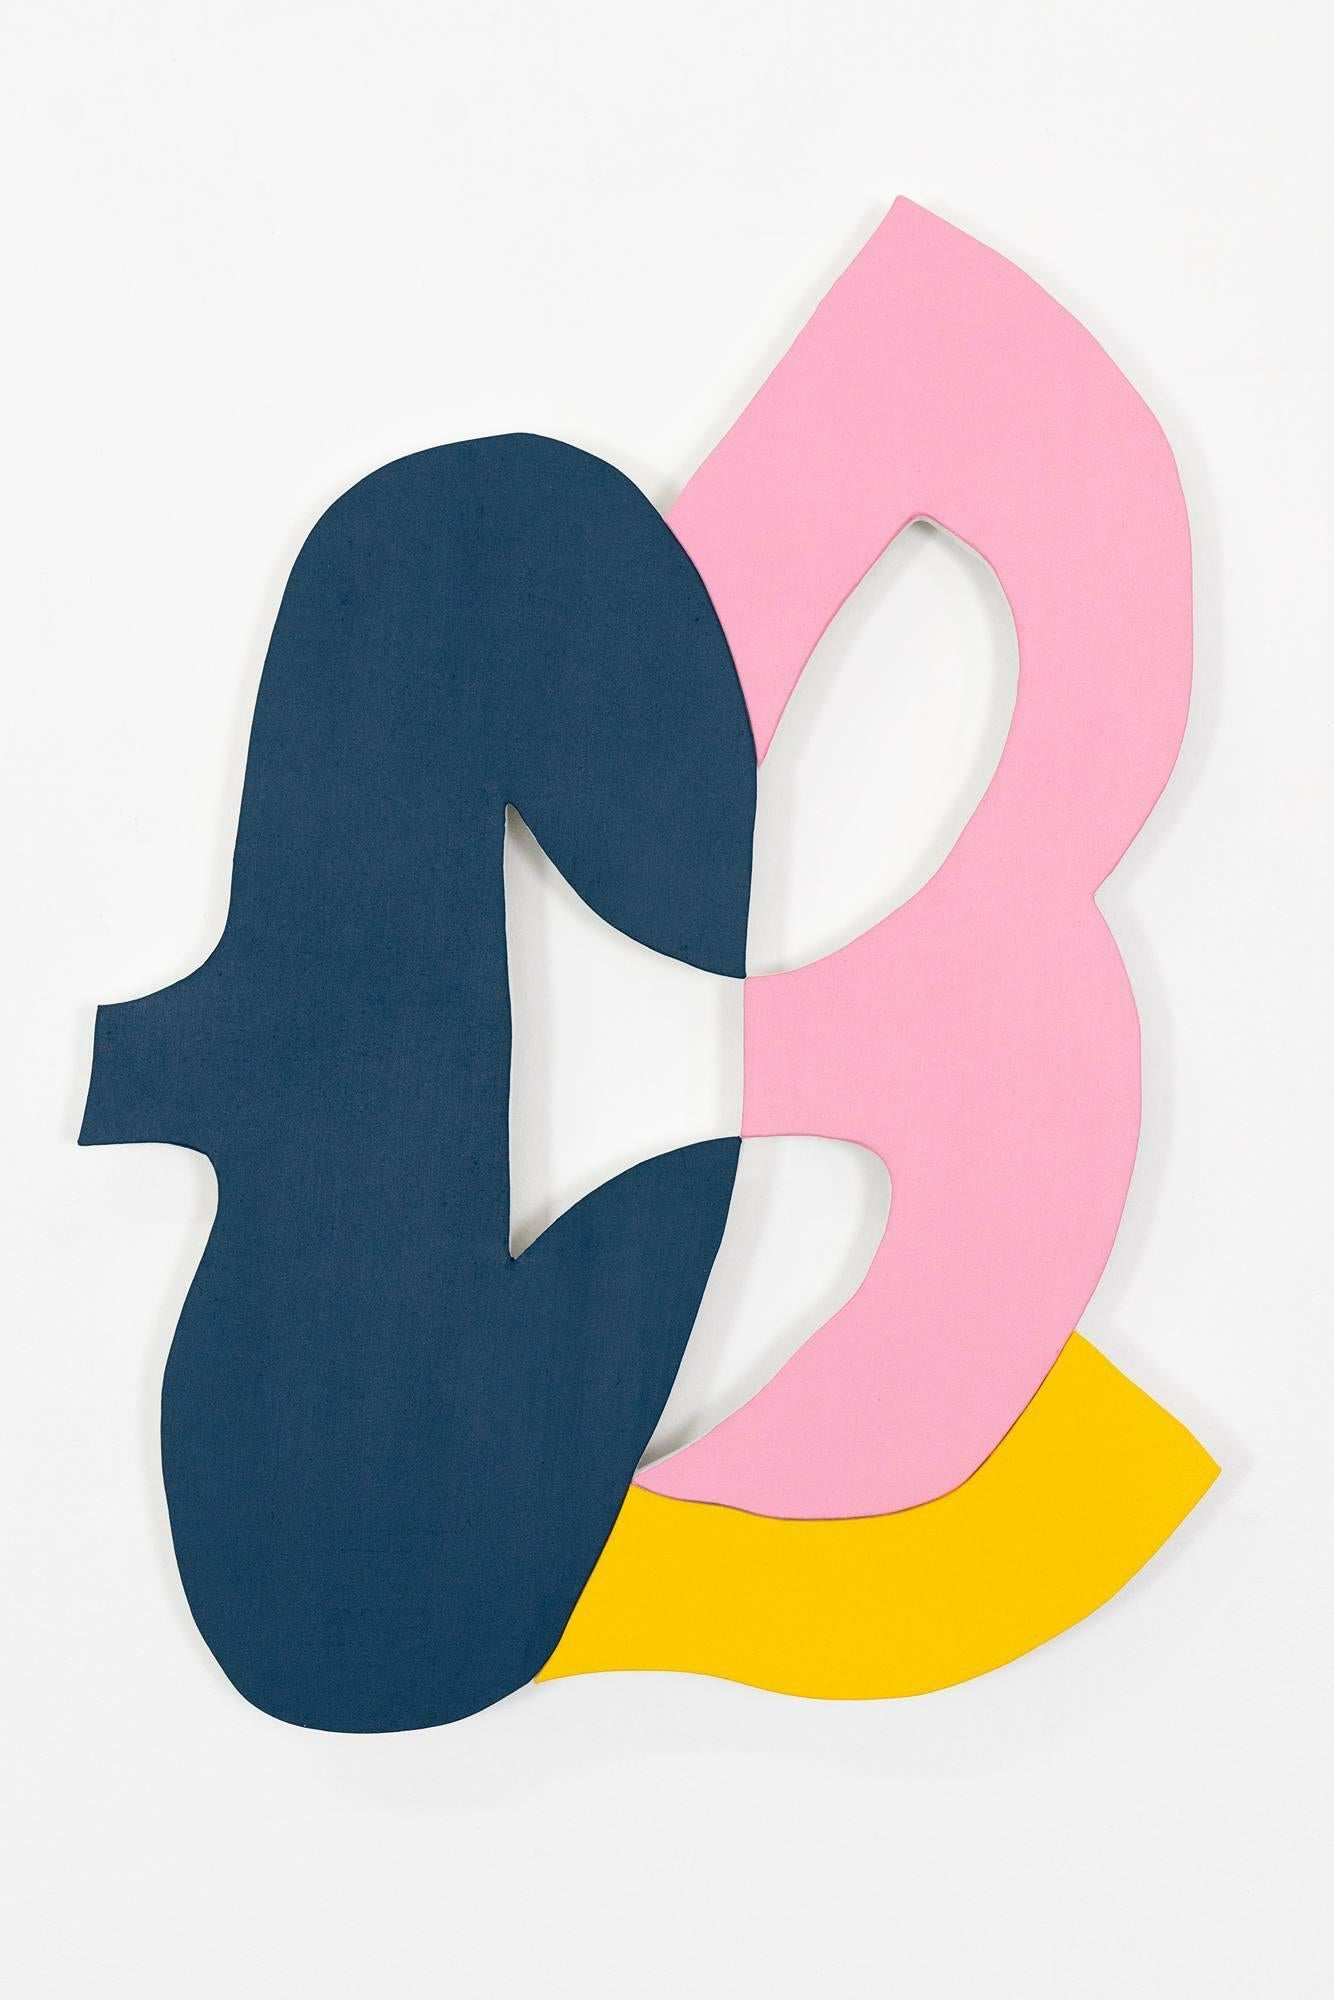 Jason Matherly Abstract Painting - "23-3" Mixed Media Wall Sculpture painting- blue pink, yellow